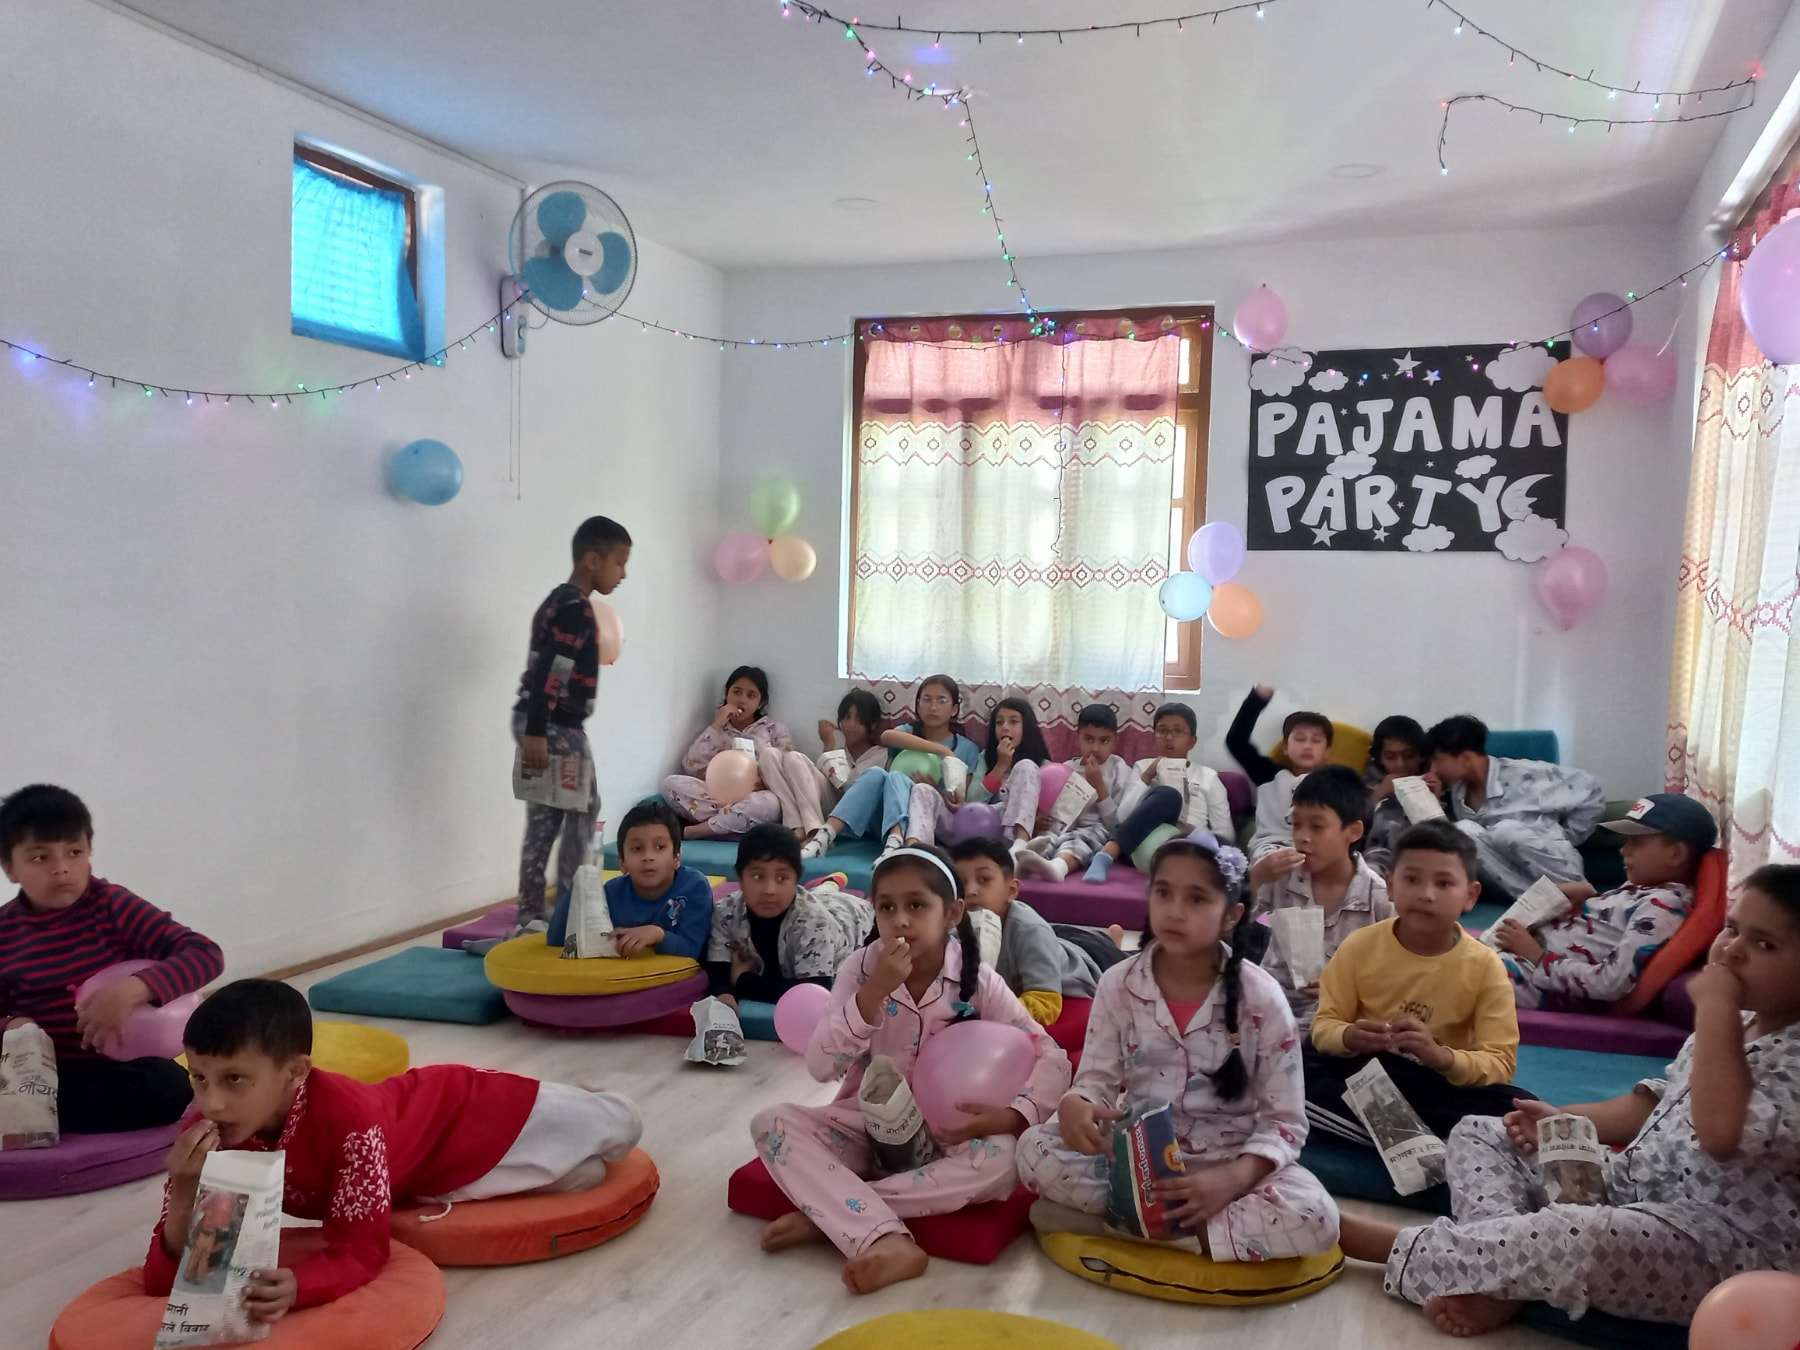 Gyan Sanskar International School